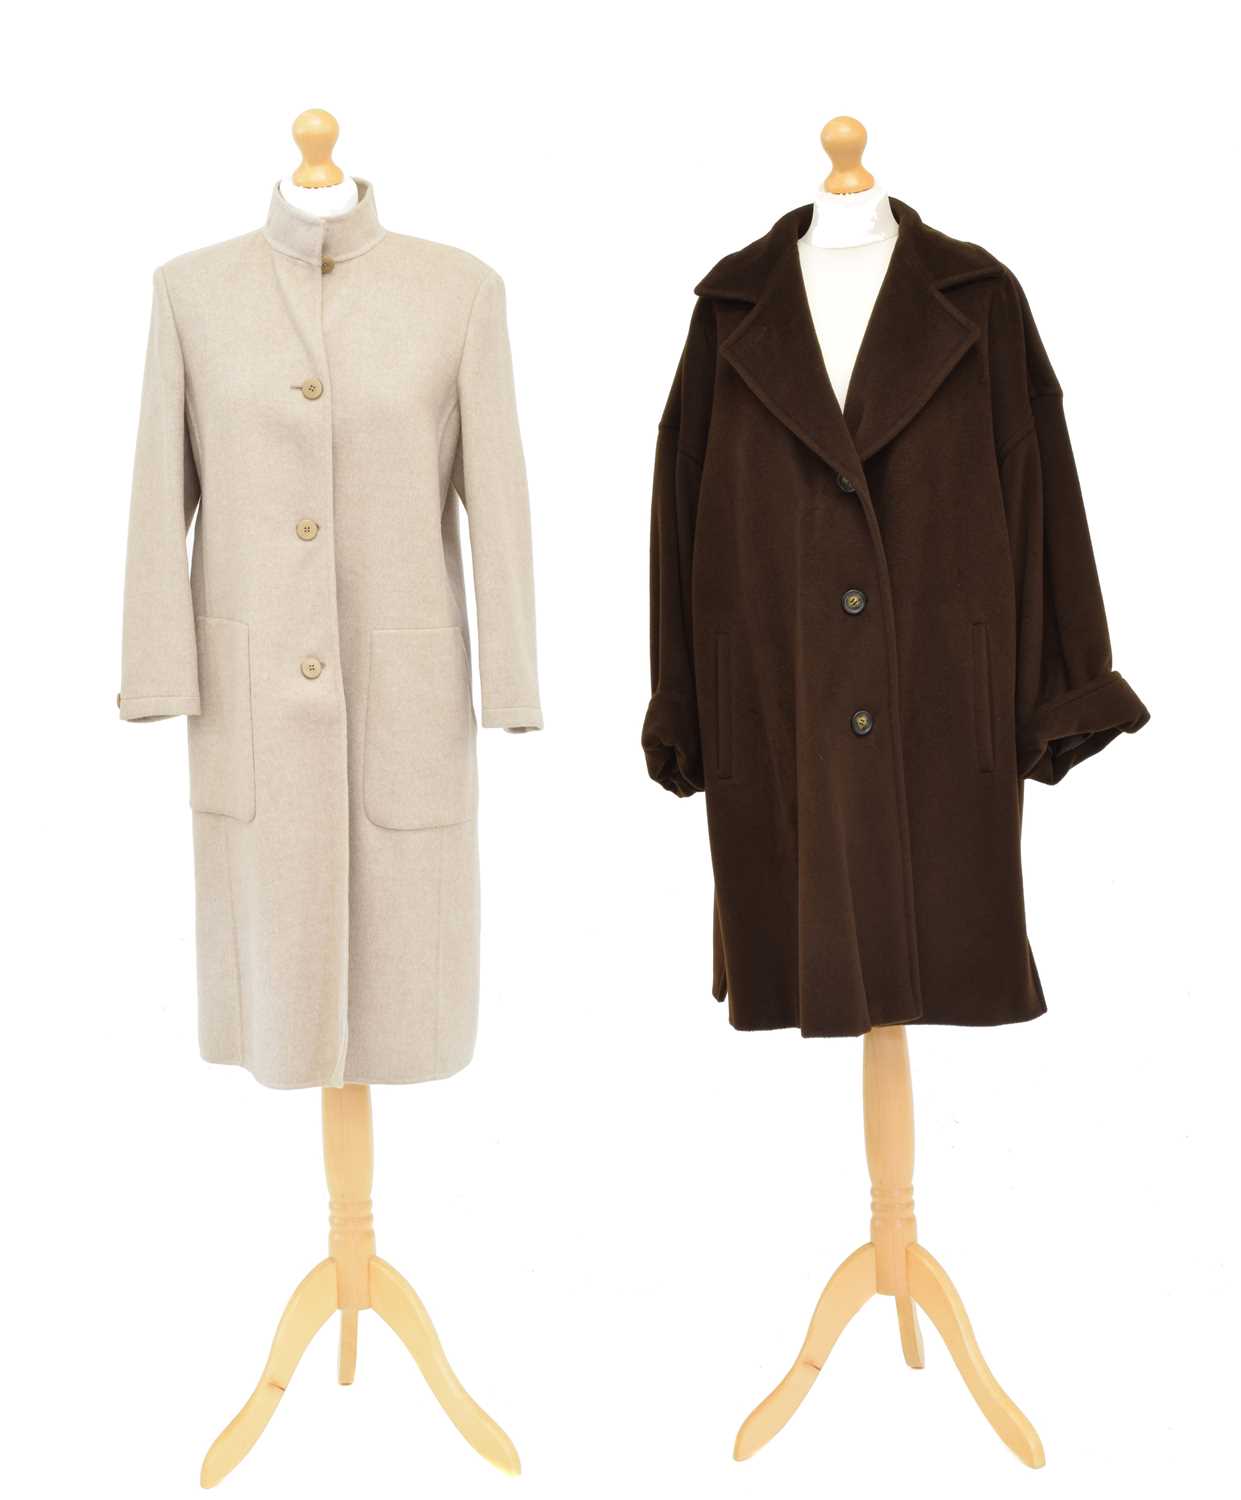 Lot 89 - Two wool coats by MaxMara